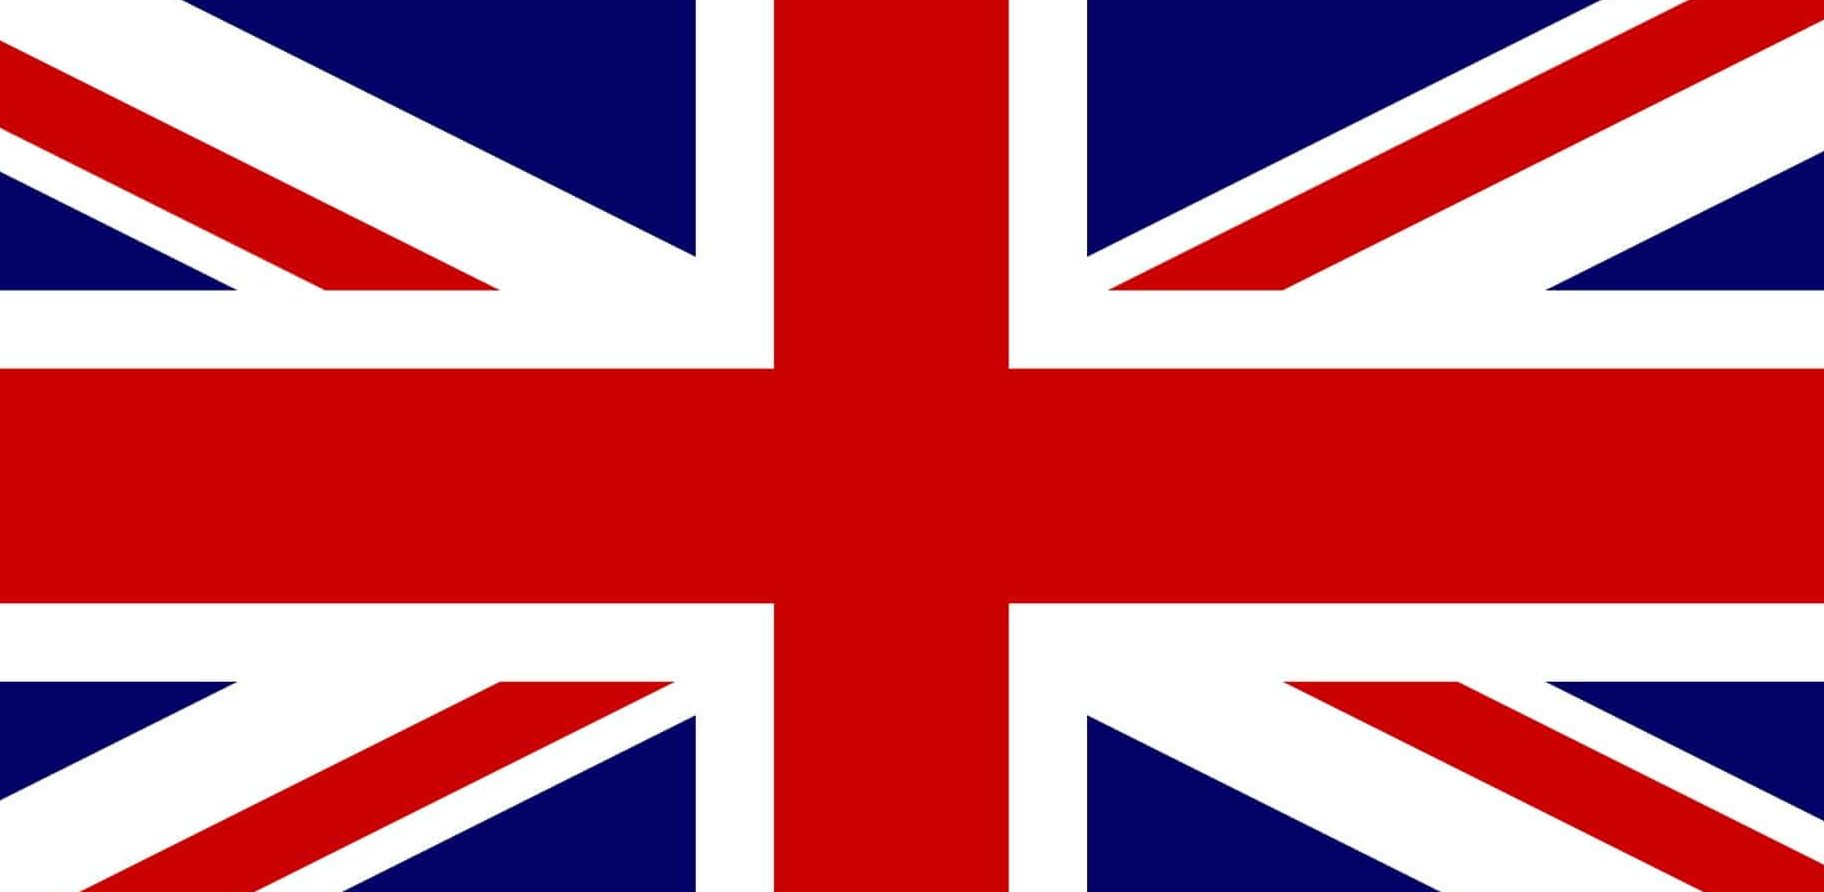 Britanska zastava - Union jackBritanska zastava - Union Jack - Velika Britanija